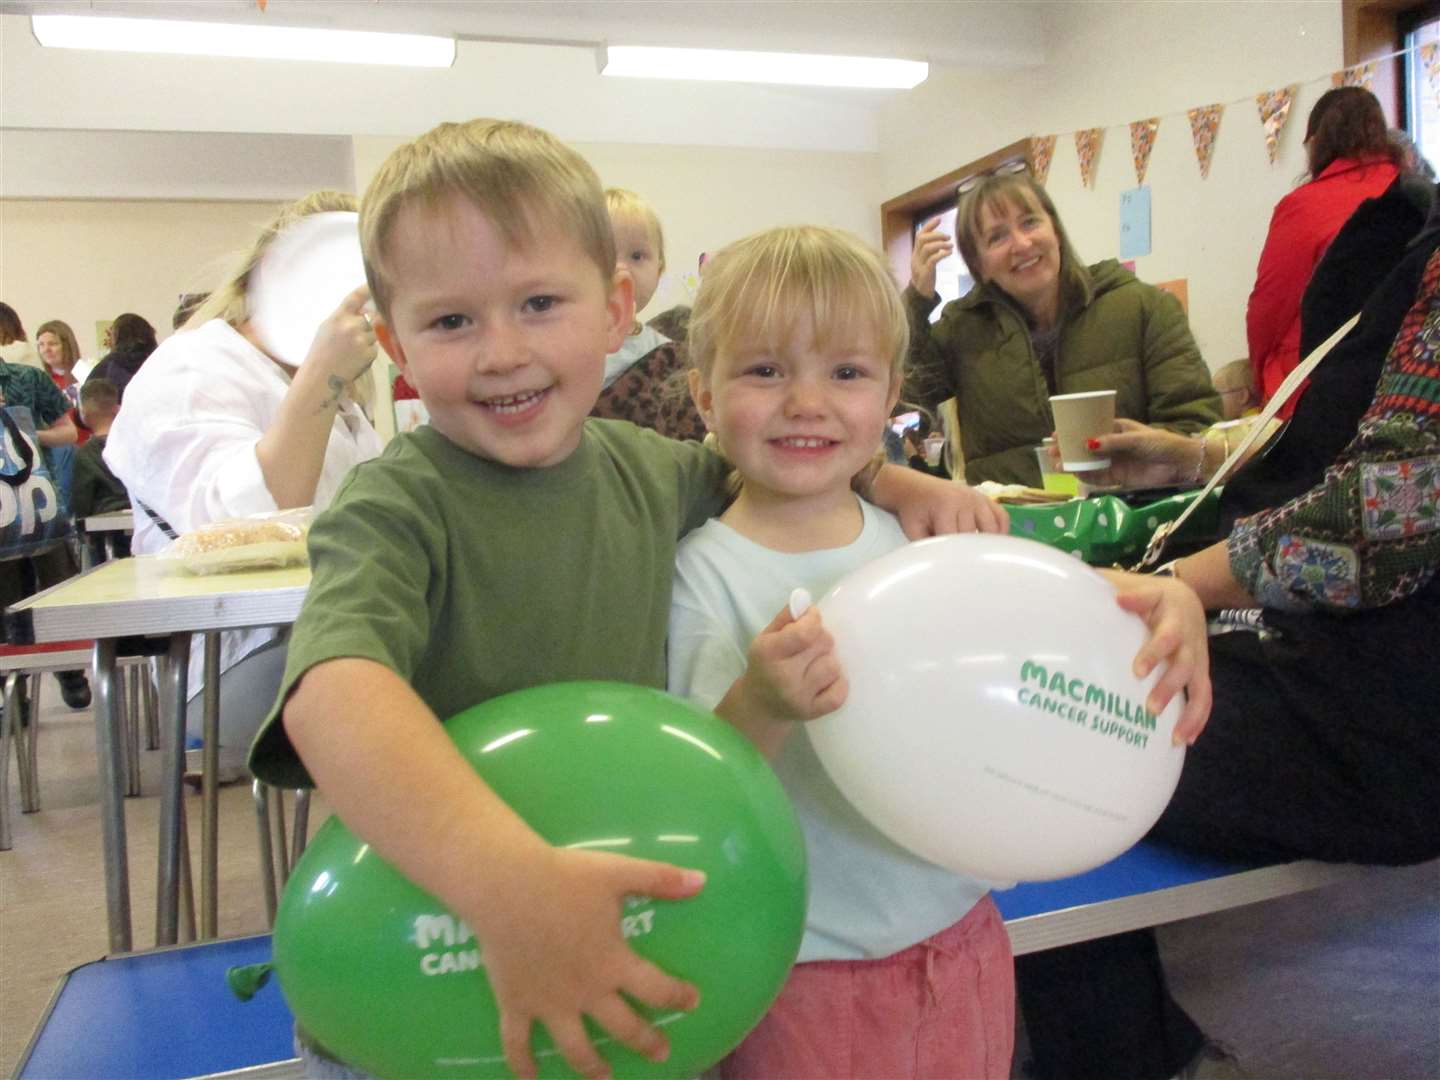 Fun and games with MacMillan balloons!